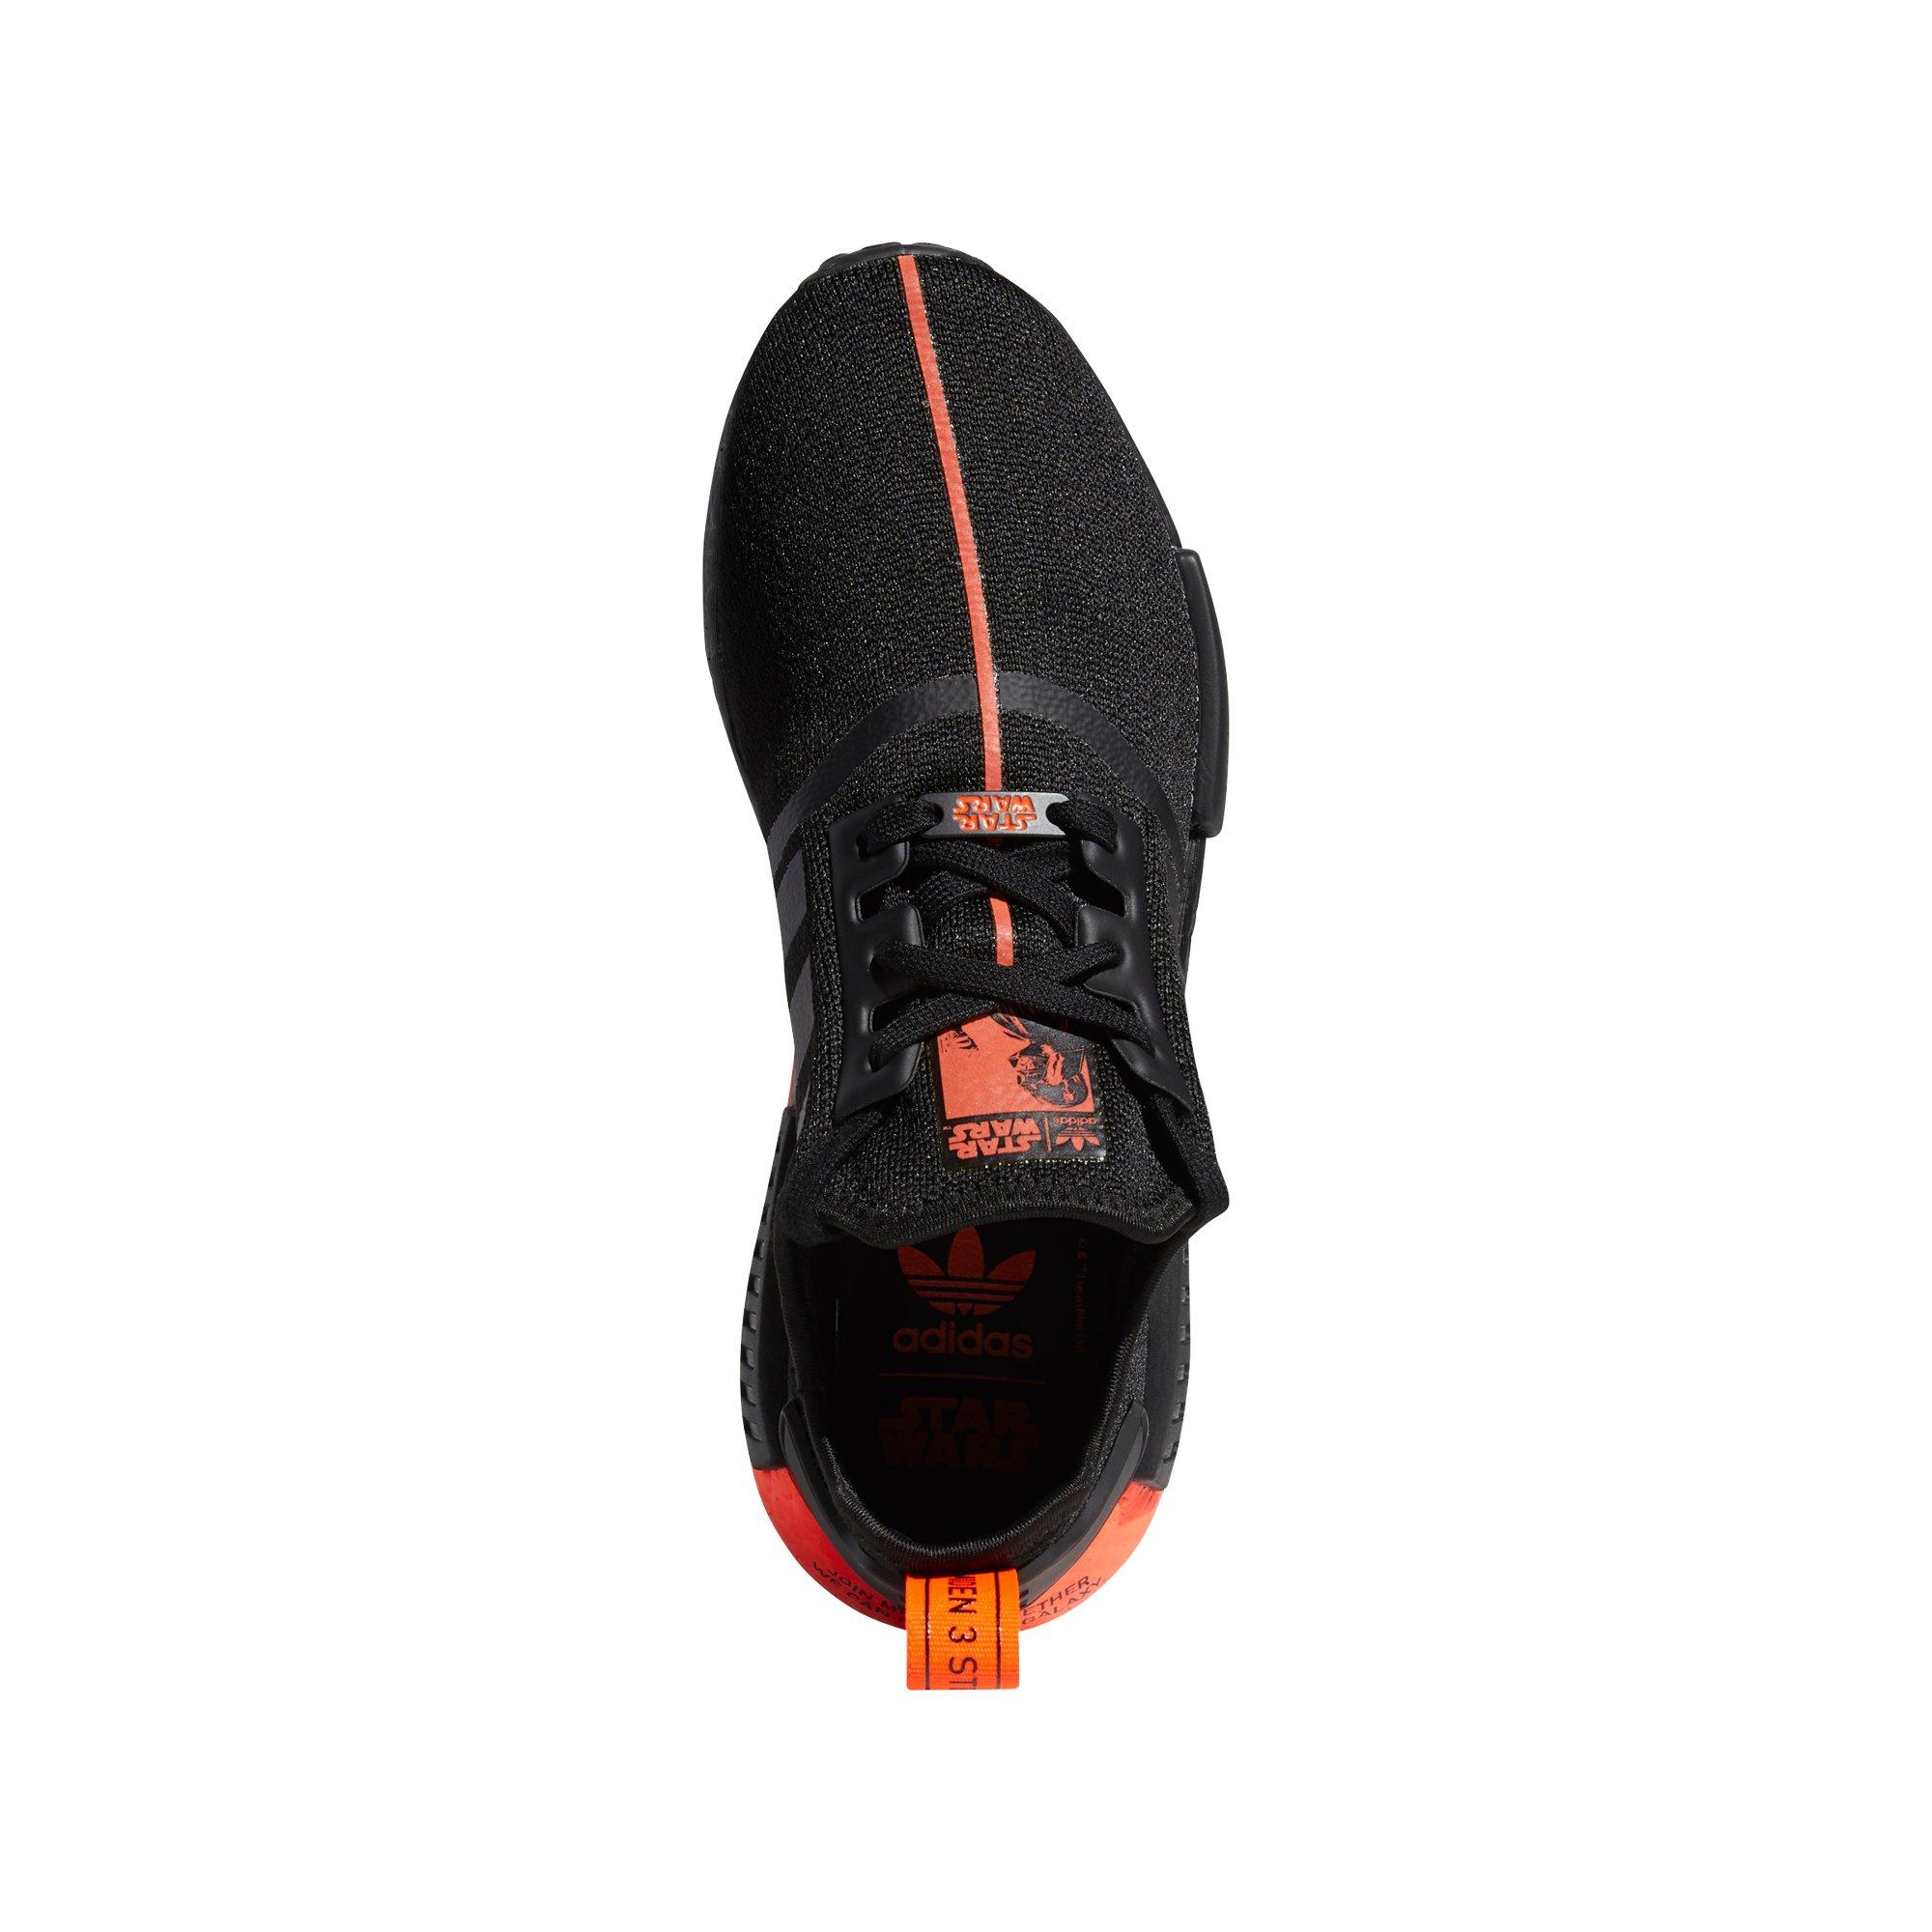 Adidas Originals NMDR1 Shoe mens Casual Road